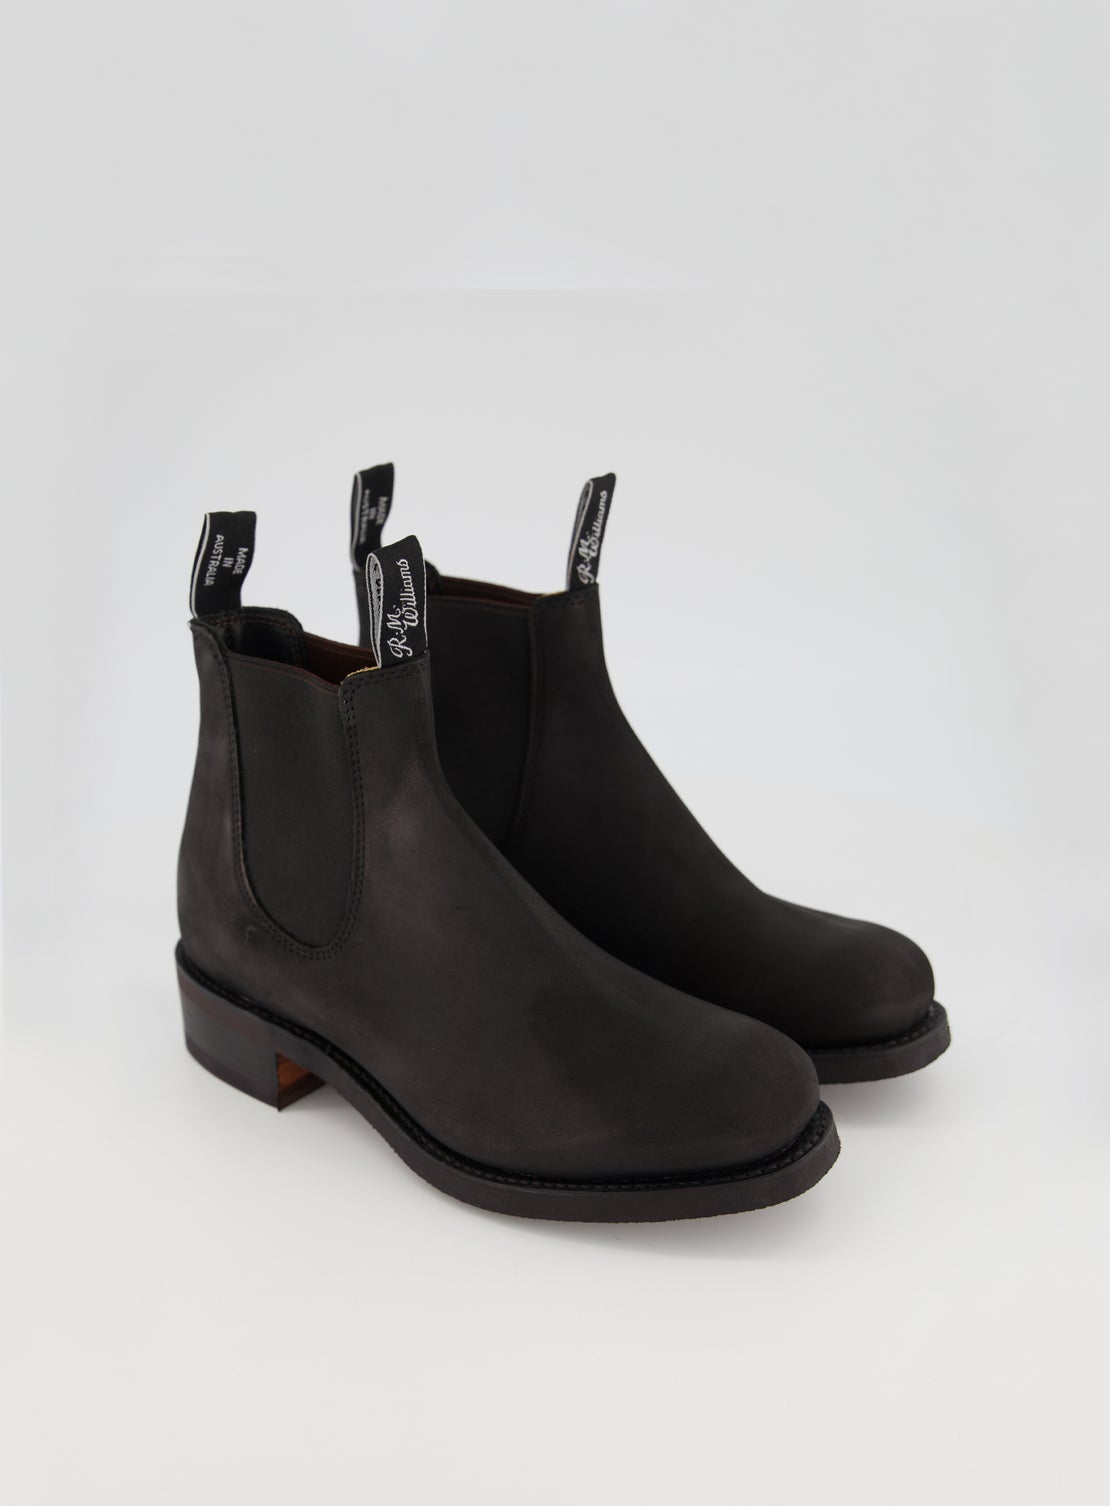 RM Williams Arnhem Boot - Black Nubuck - Product - Working Style